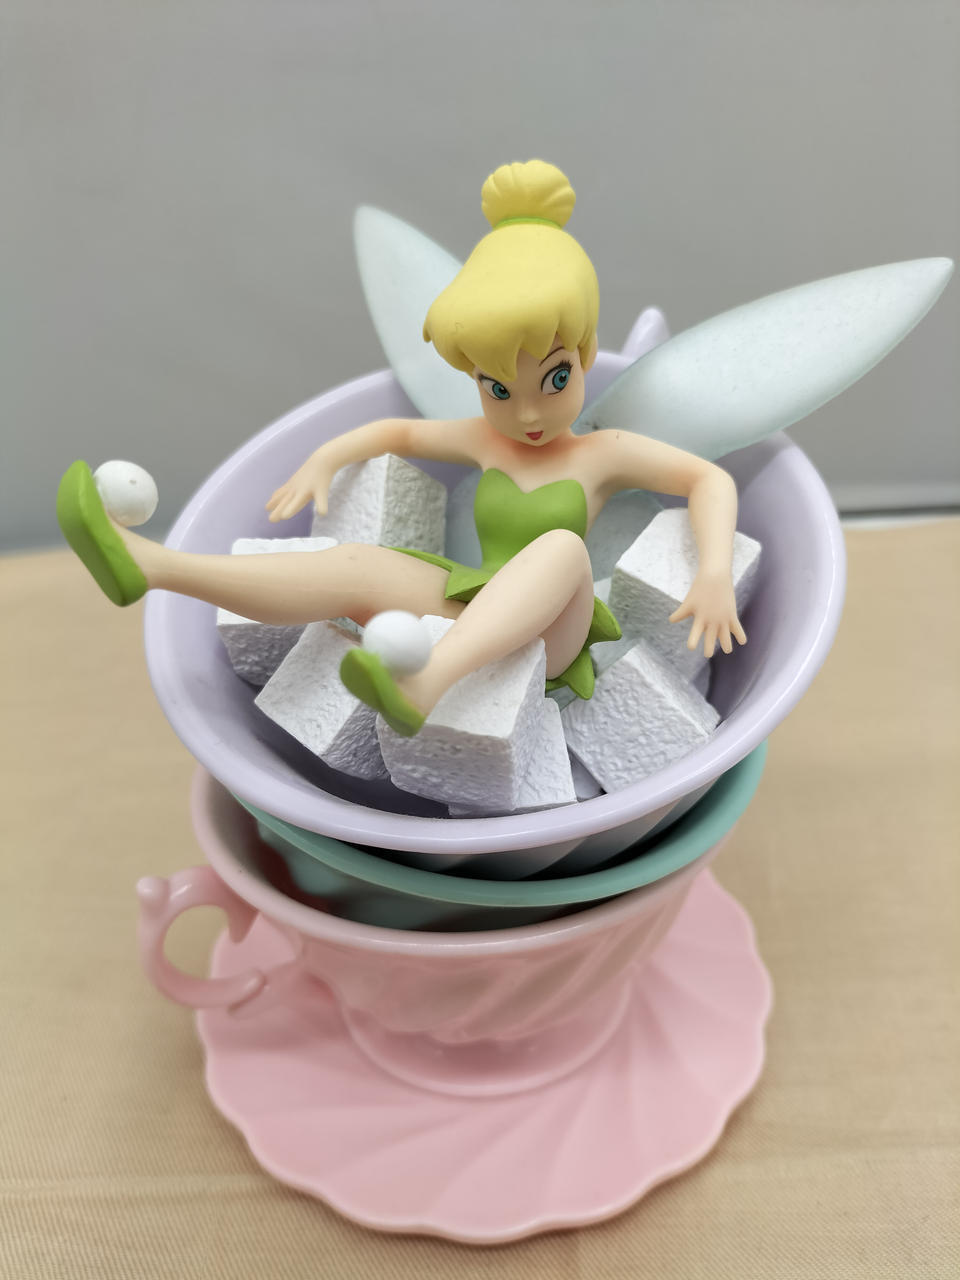 Ichibankuji Banpresto A Prize Tinker Bell Figure Disney Characters Happiness Tea